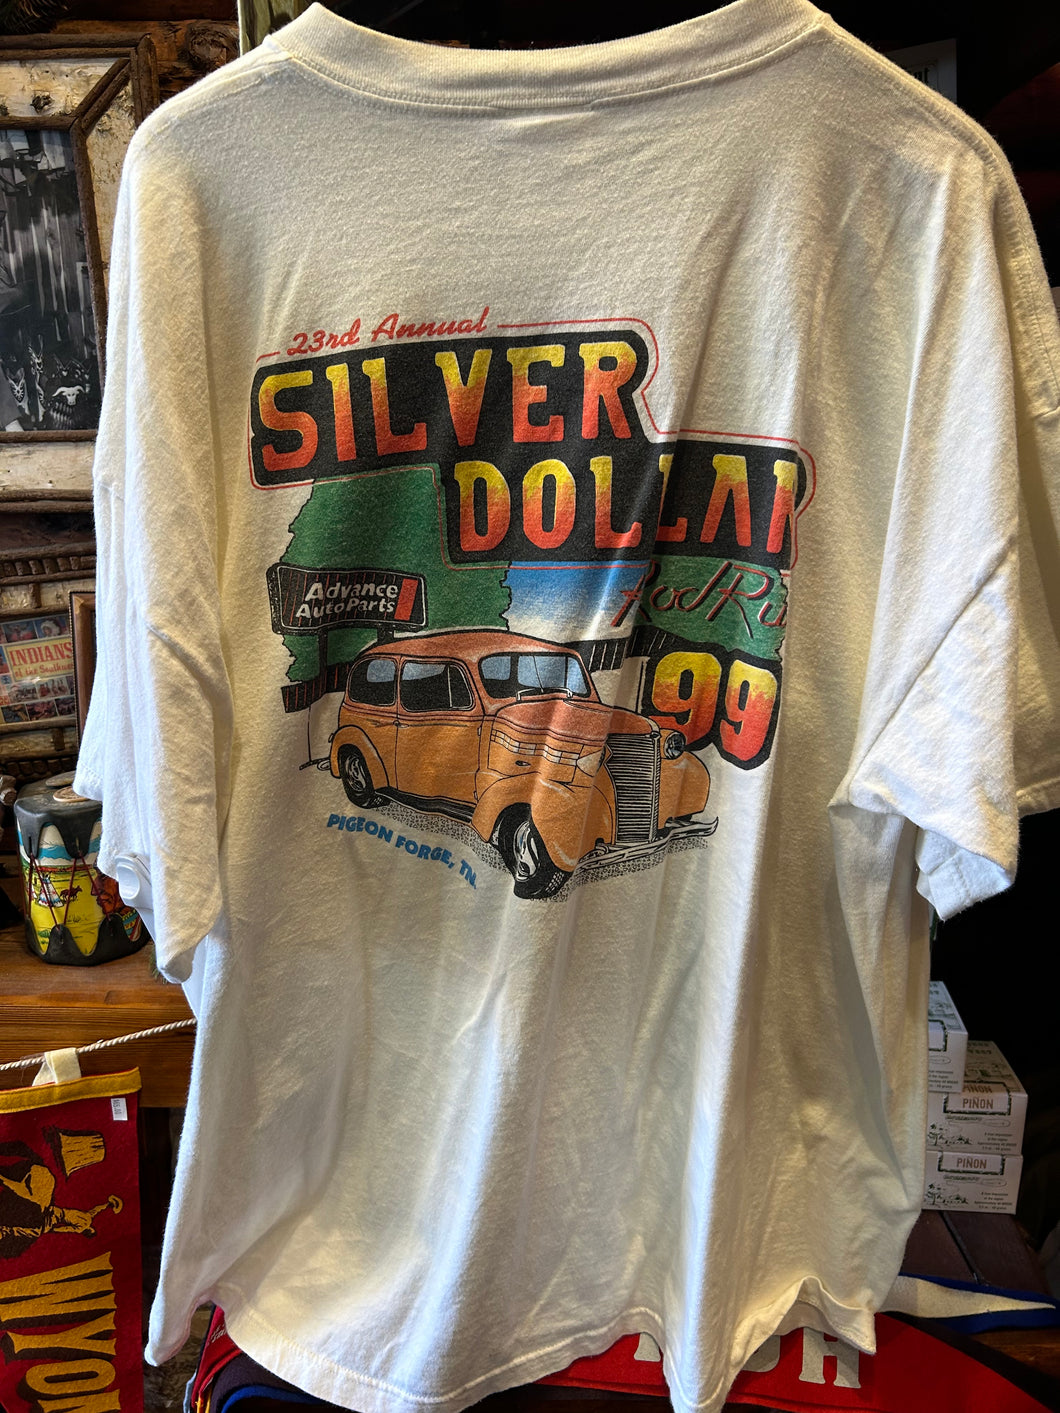 Vintage 23rd Silver Dollar, XXXL